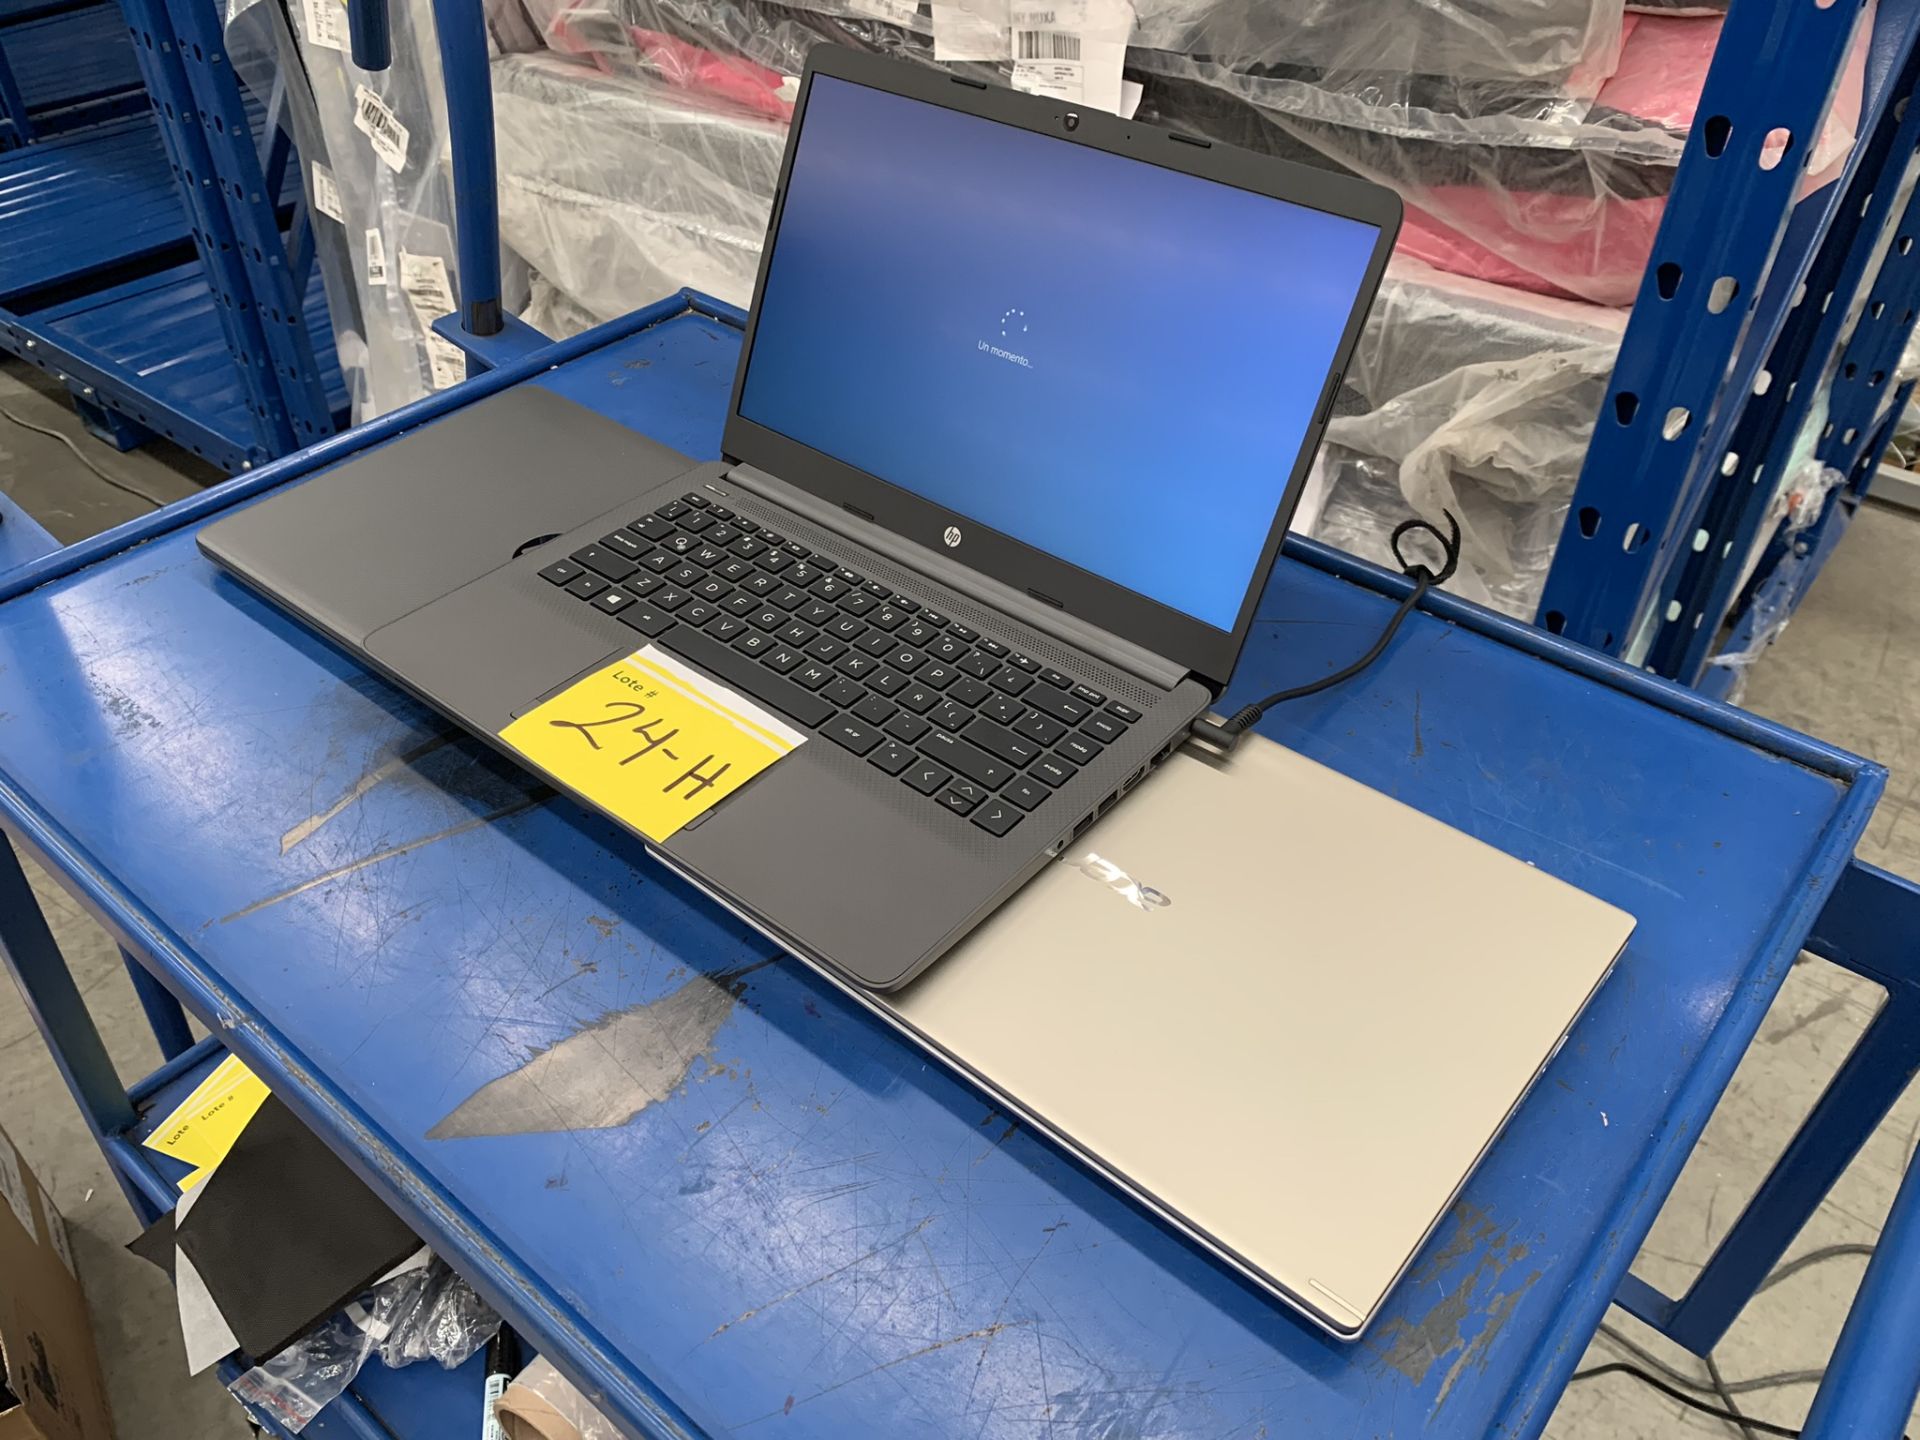 Lote De 3 Laptops Contiene: 1 Laptop Marca Acer Modelo Aspire 5 Serie 1022F3400 Color Gris So Windo - Image 13 of 18